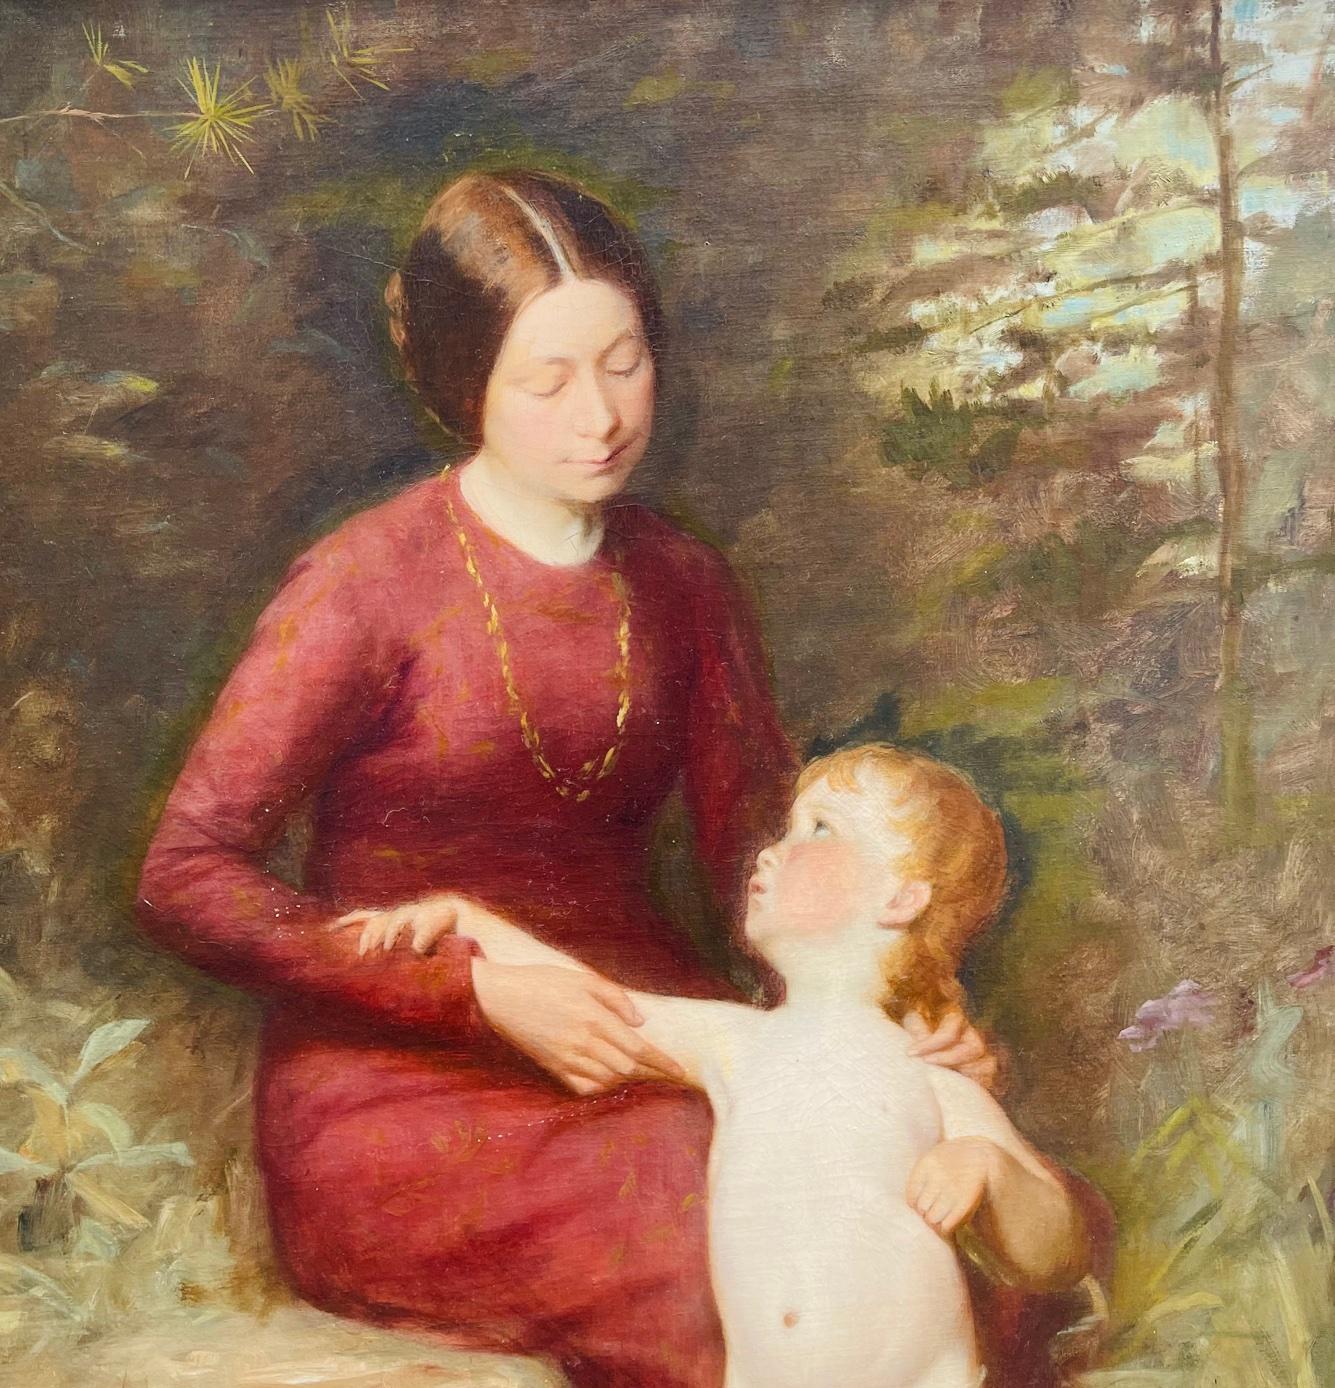 Henry Oliver Walker (1843 - 1929)
Dated 1892
Oil on canvas
Bouguereau School

32